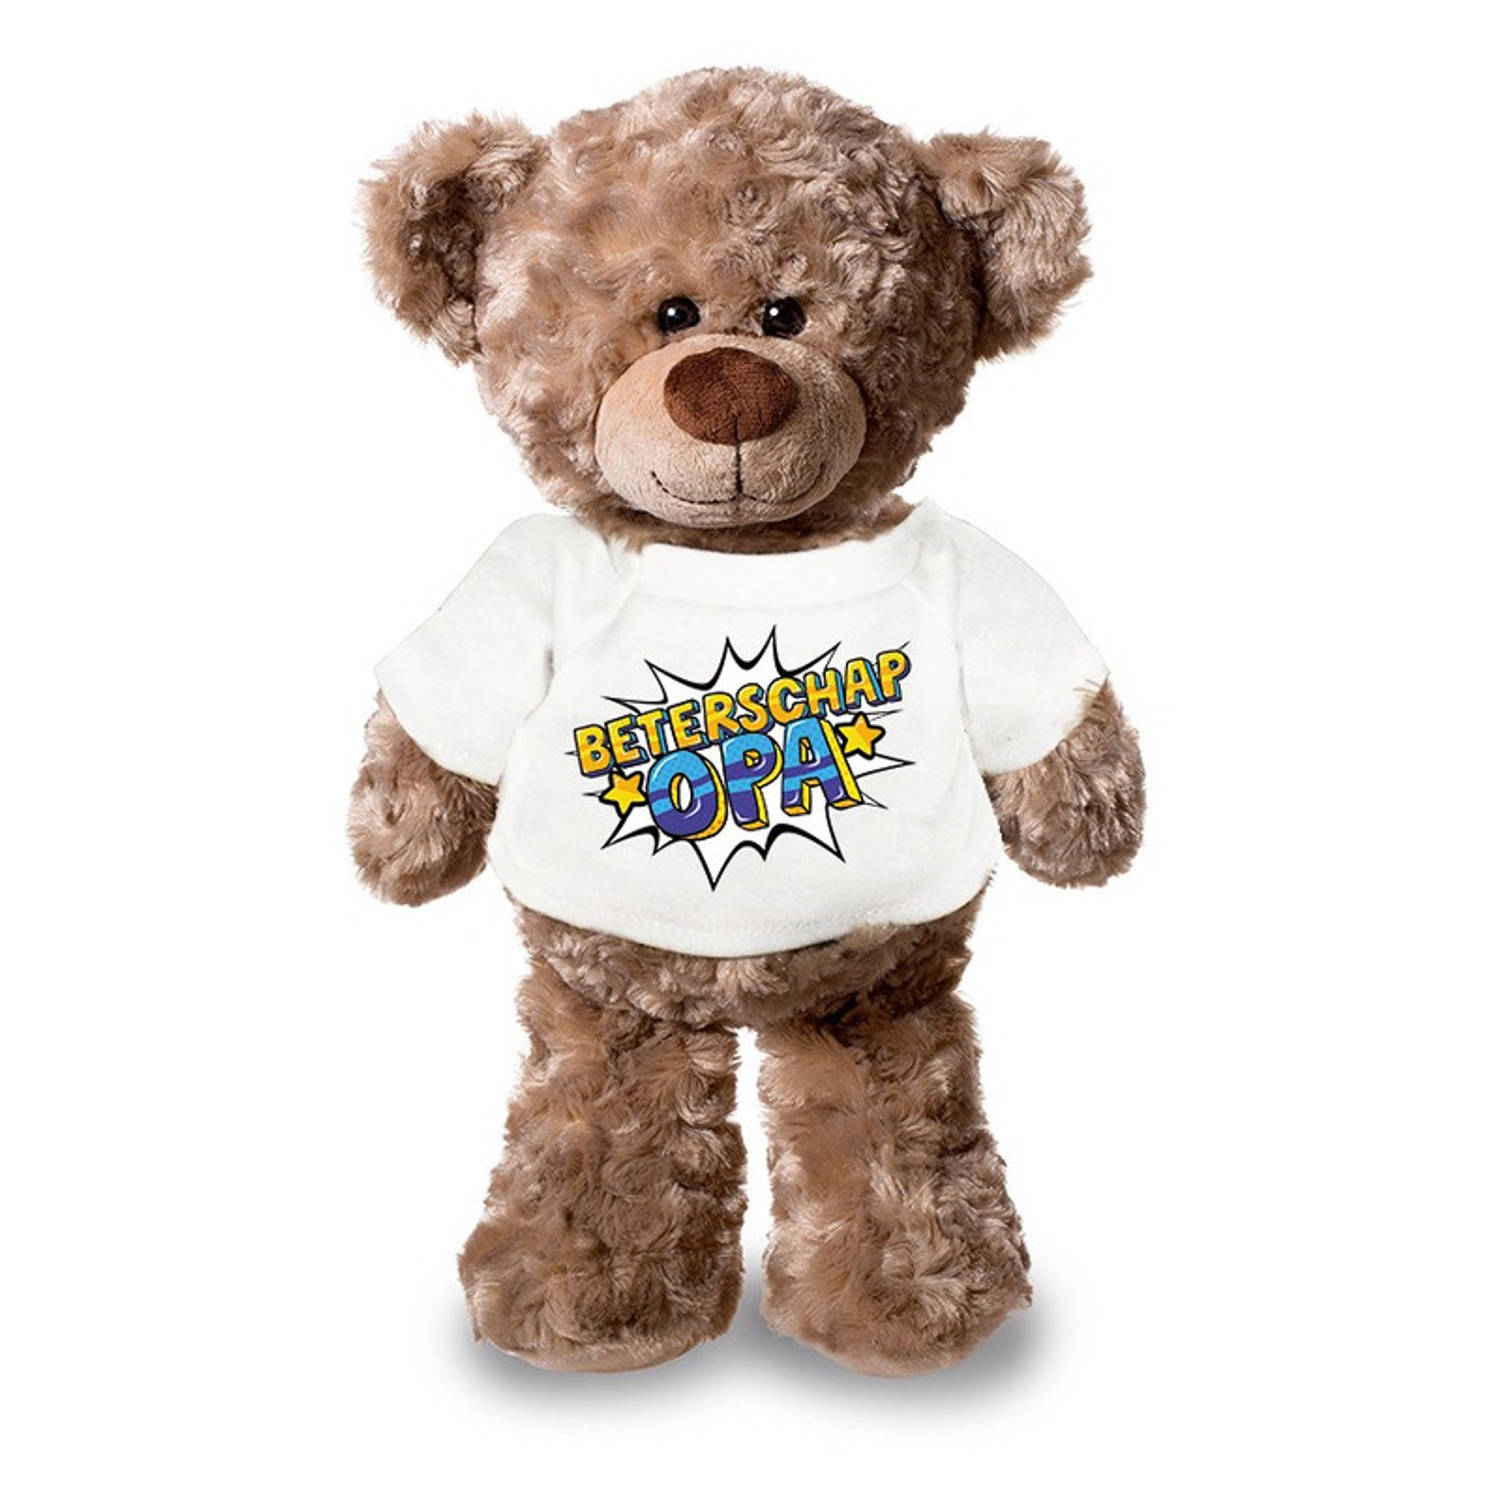 Beterschap opa pluche teddybeer knuffel 24 cm met wit pop art t-shirt beterschap opa-cadeau knuffelb